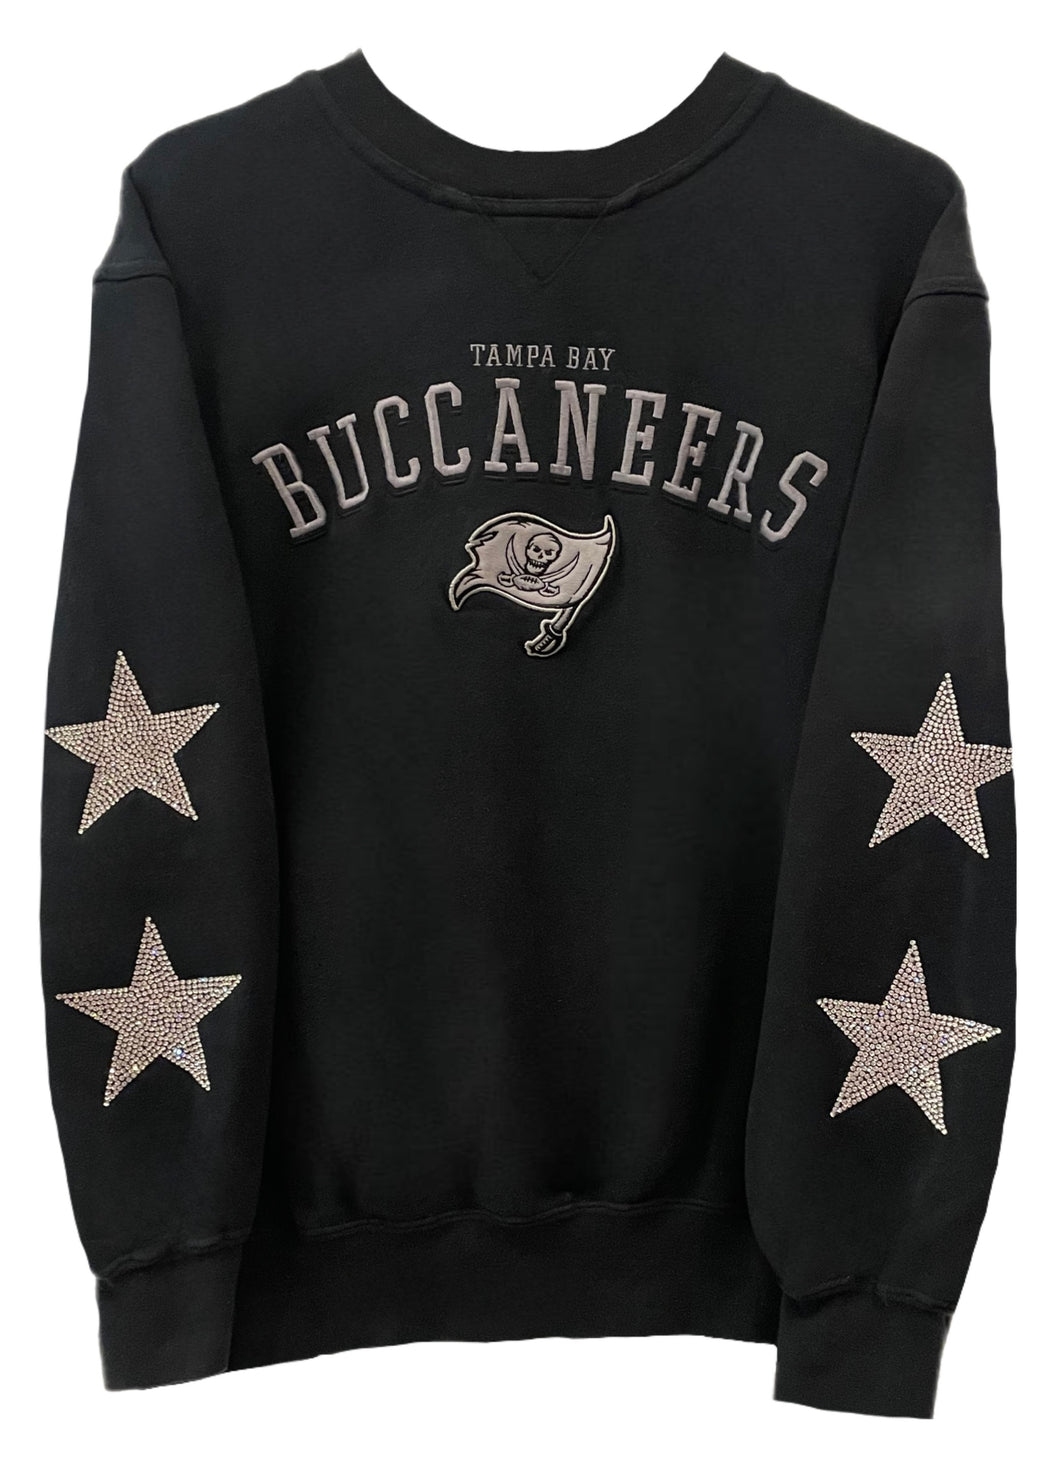 Tampa Bay Buccaneers, NFL One of a KIND “Rare Find”Vintage Sweatshirt with Crystal Star Design